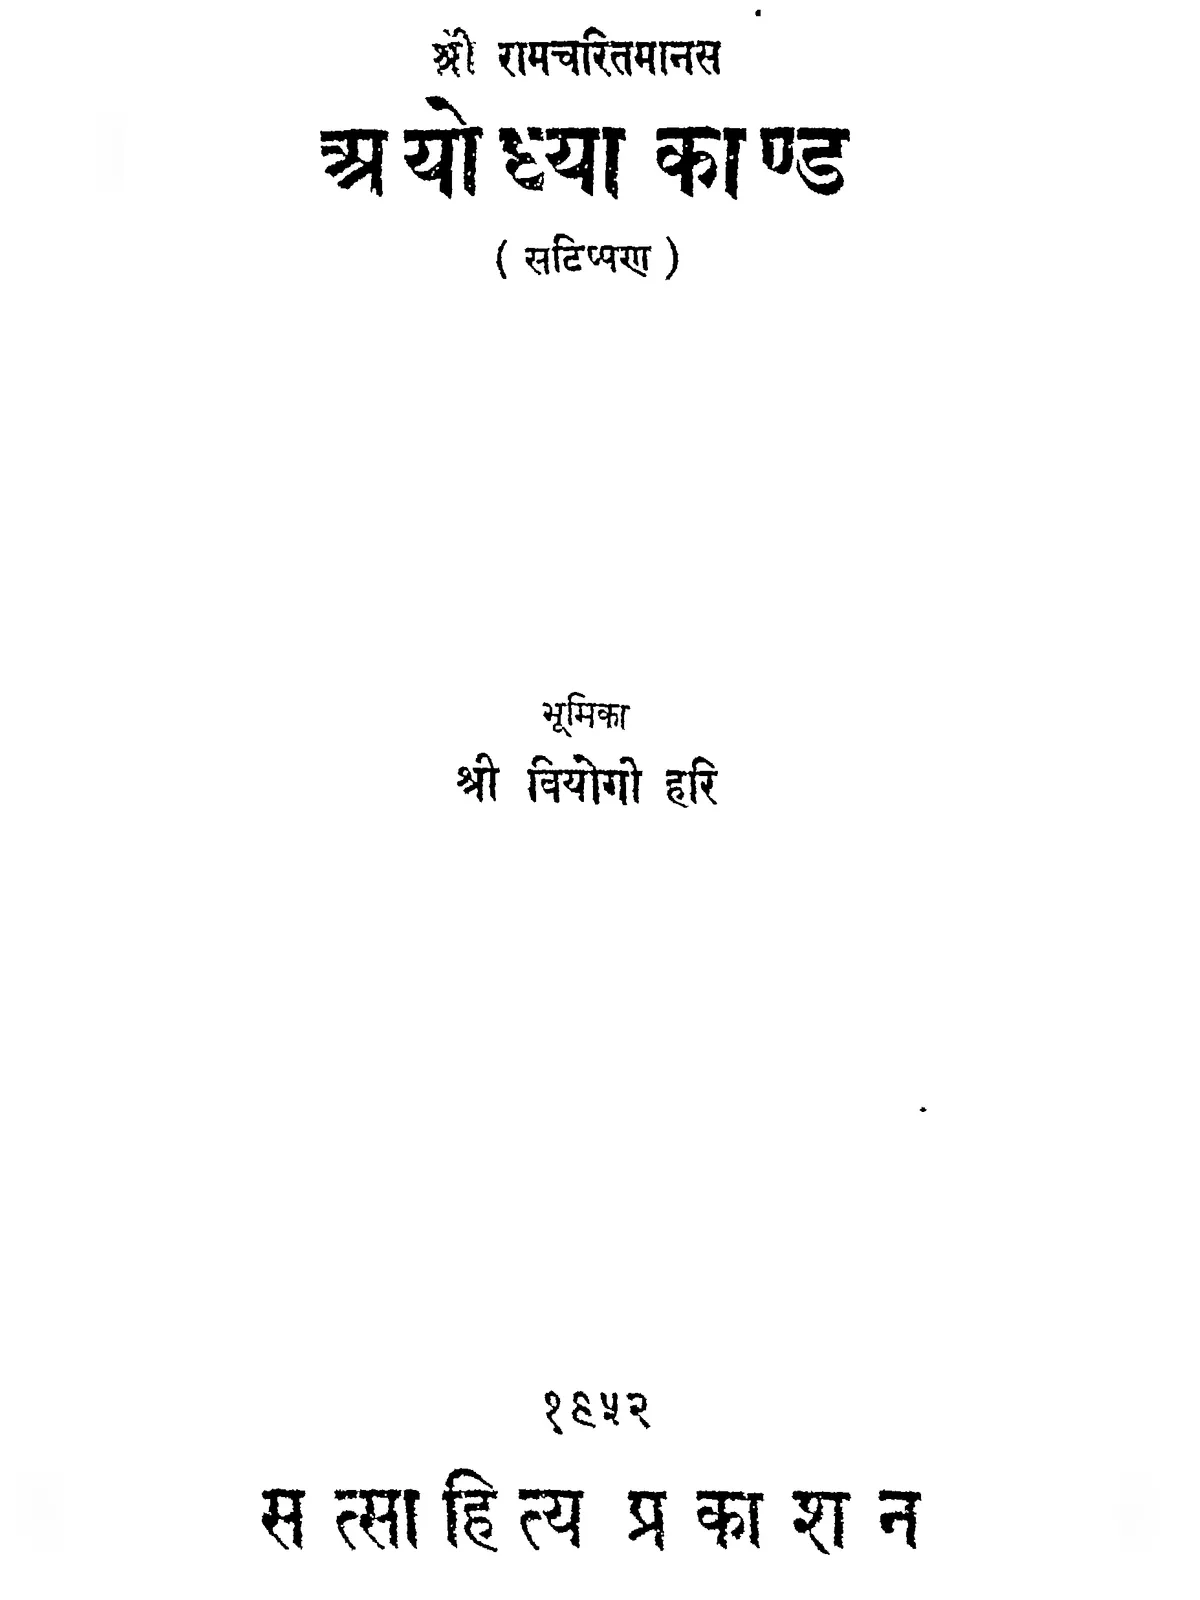 Ramcharitmanas Ayodhya Kand – रामचरितमानस अयोध्या काण्ड